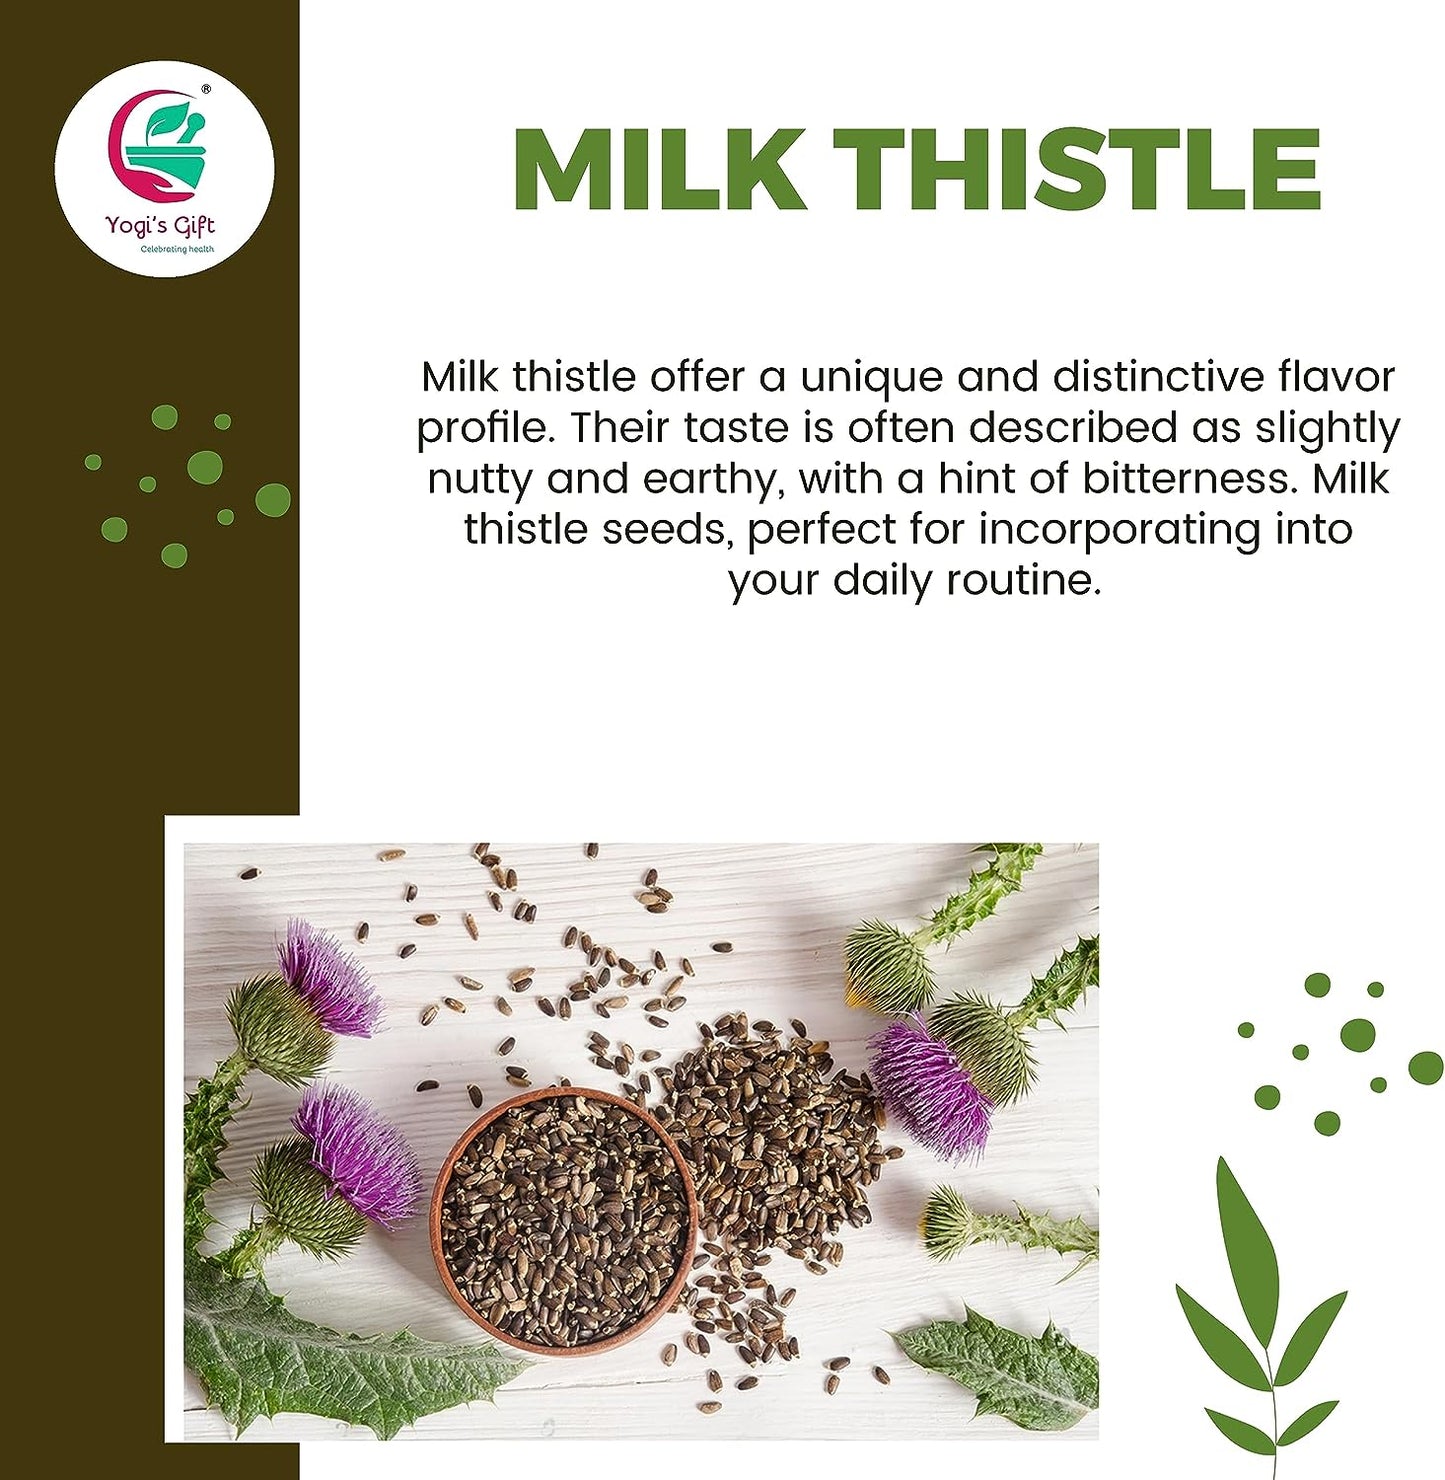 Milk Thistle Seeds 1 LB | Whole Milk Thistle for Tea | by Yogi's Gift®